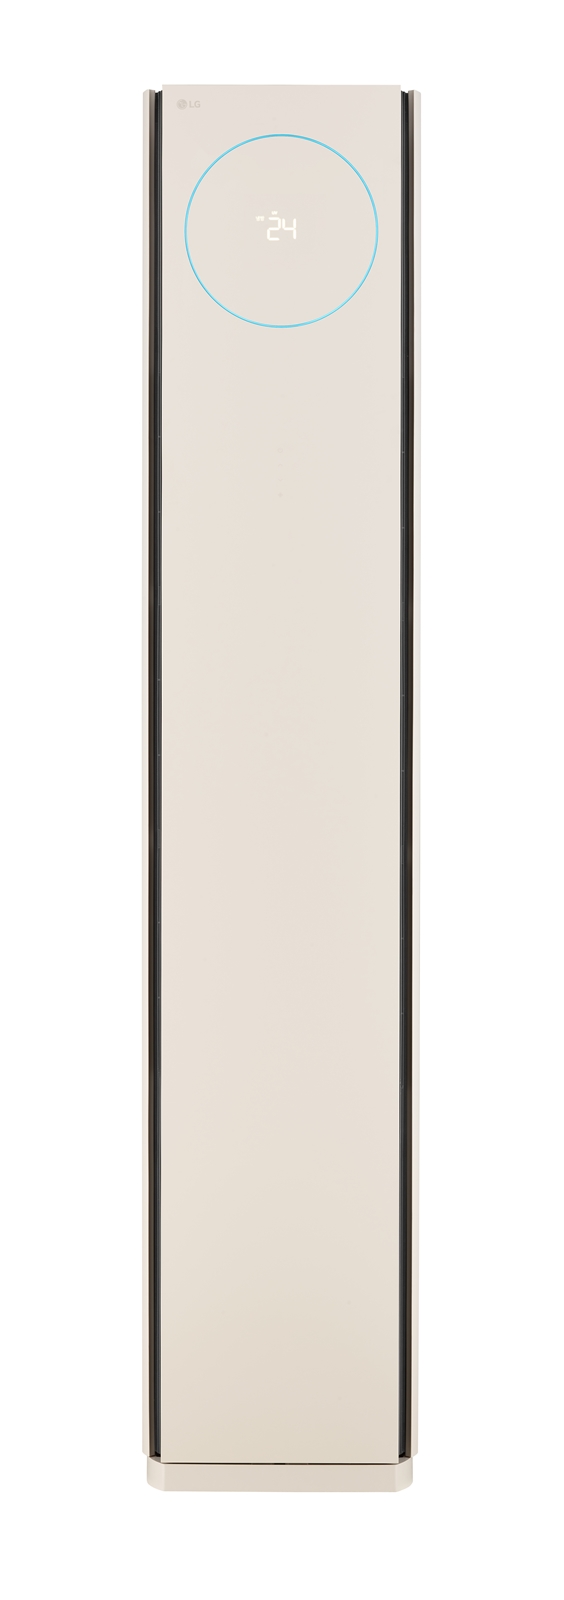 LG 휘센 타워Ⅱ 사계절 에어컨 제품 [사진=LG전자]